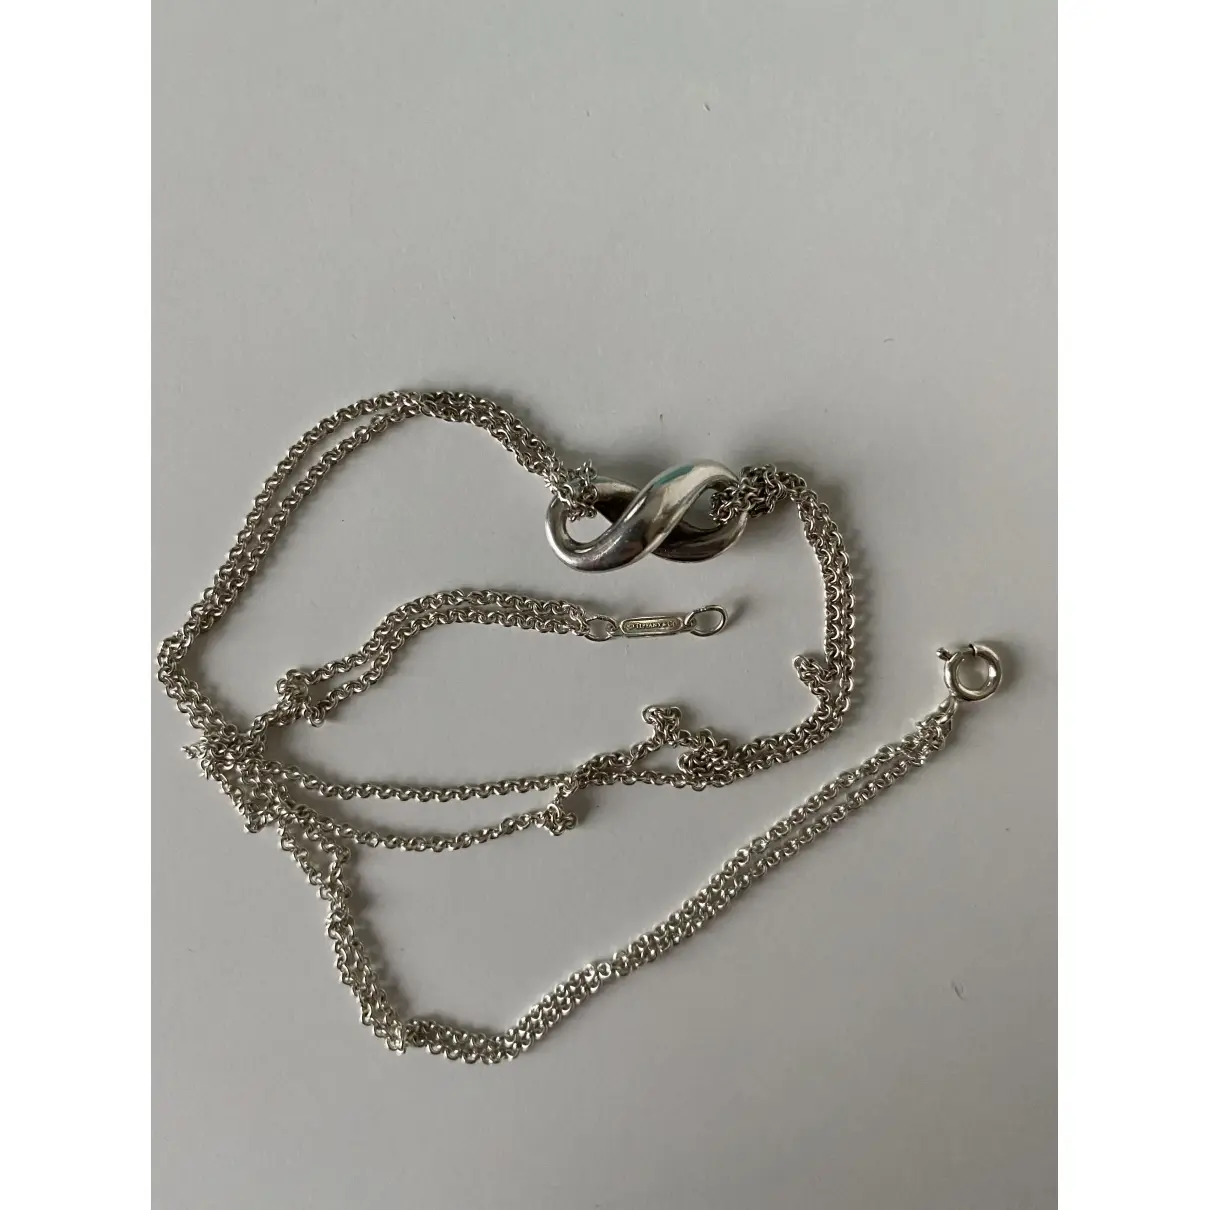 Buy Tiffany & Co Tiffany Infinity silver necklace online